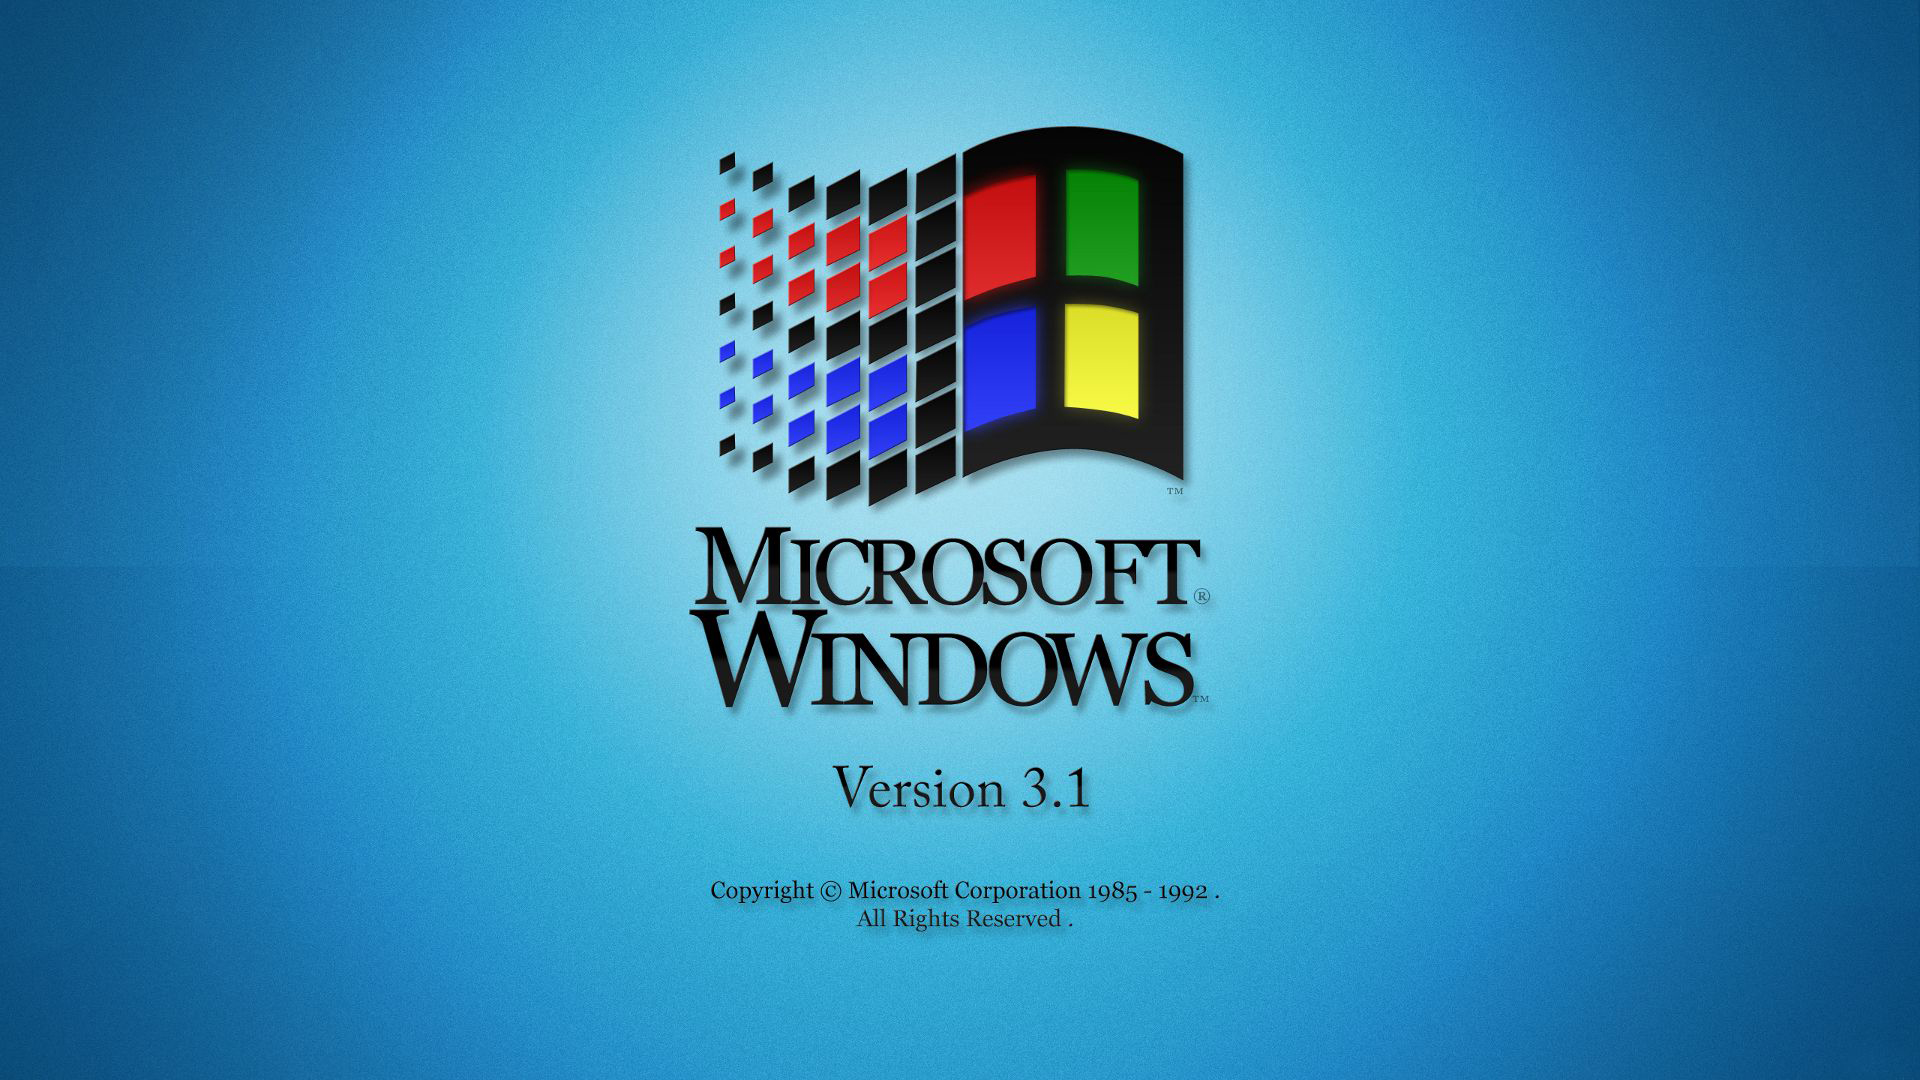 Microsoft Original Windows Classic Wallpaper. Windows Latest News